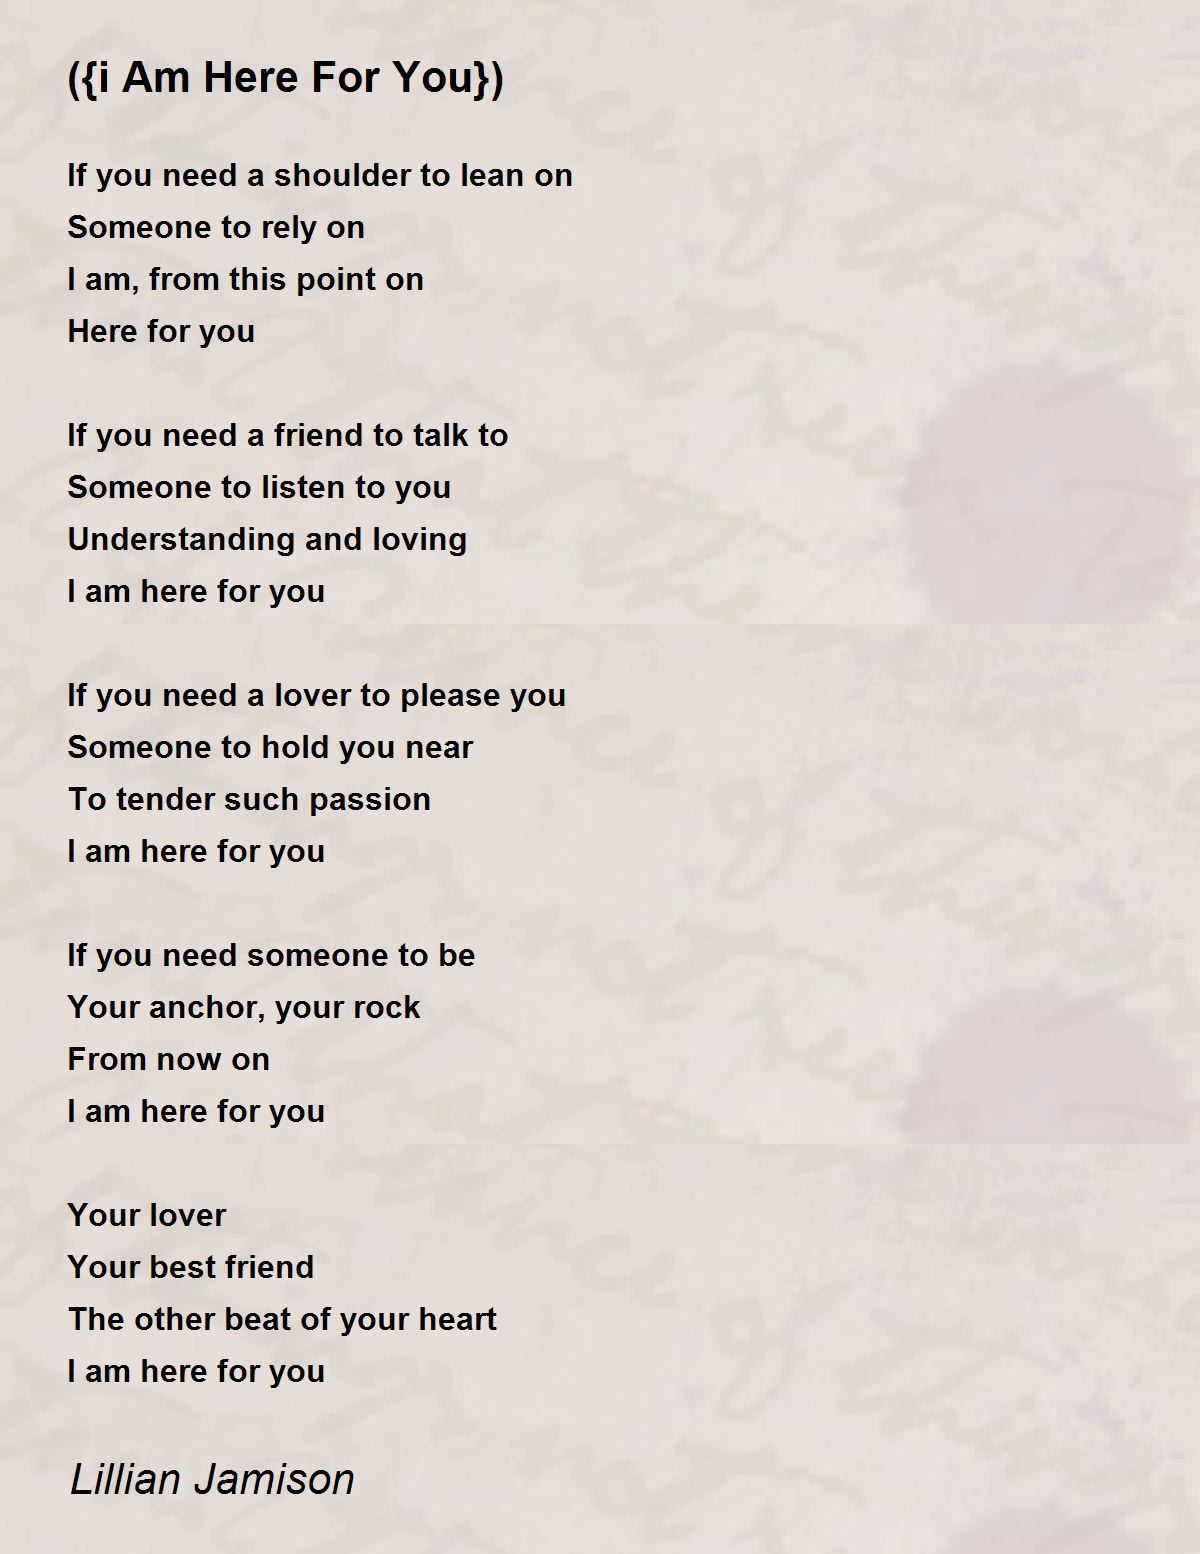 (i Am Here For You) Poem by Lillian Jamison - Poem Hunter